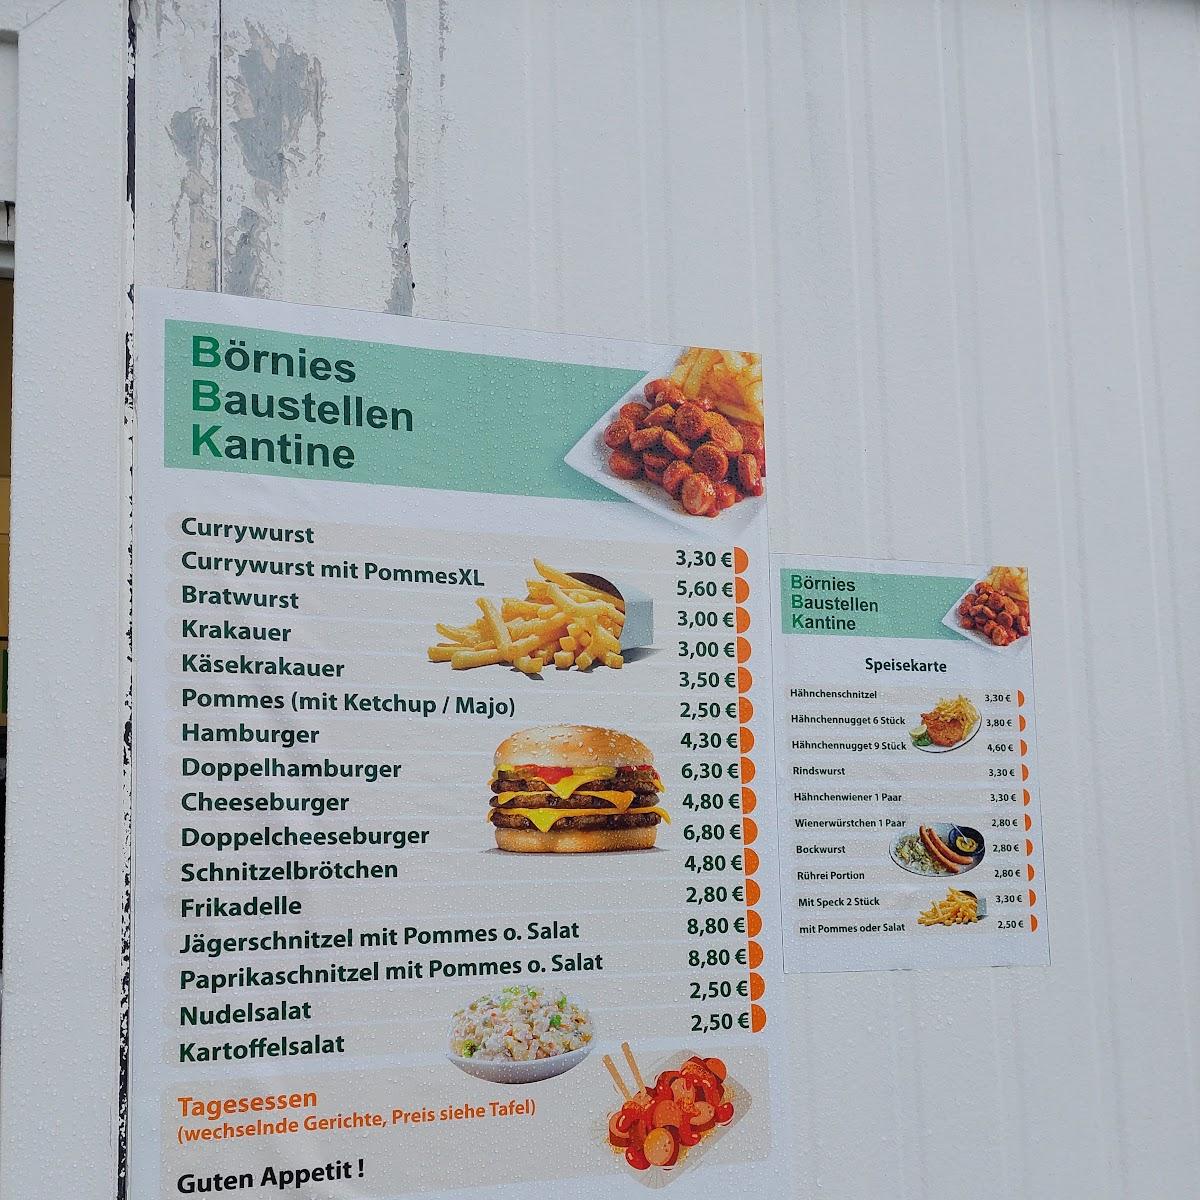 Restaurant "Börnies Baustellenkantine" in Neumünster